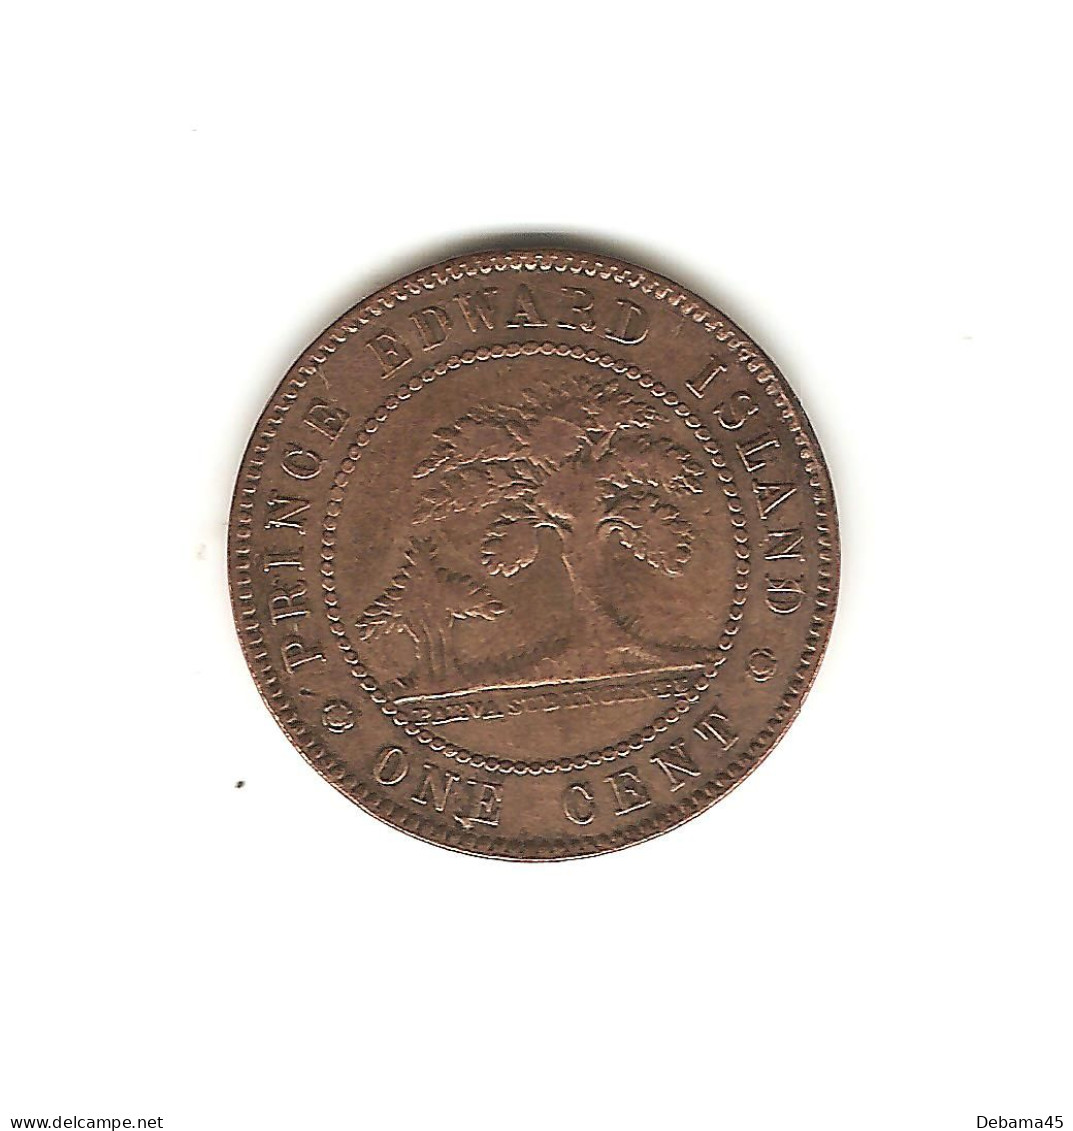 598/ Canada : Province Prince Edward Island : 1 Cent 1871 - Canada